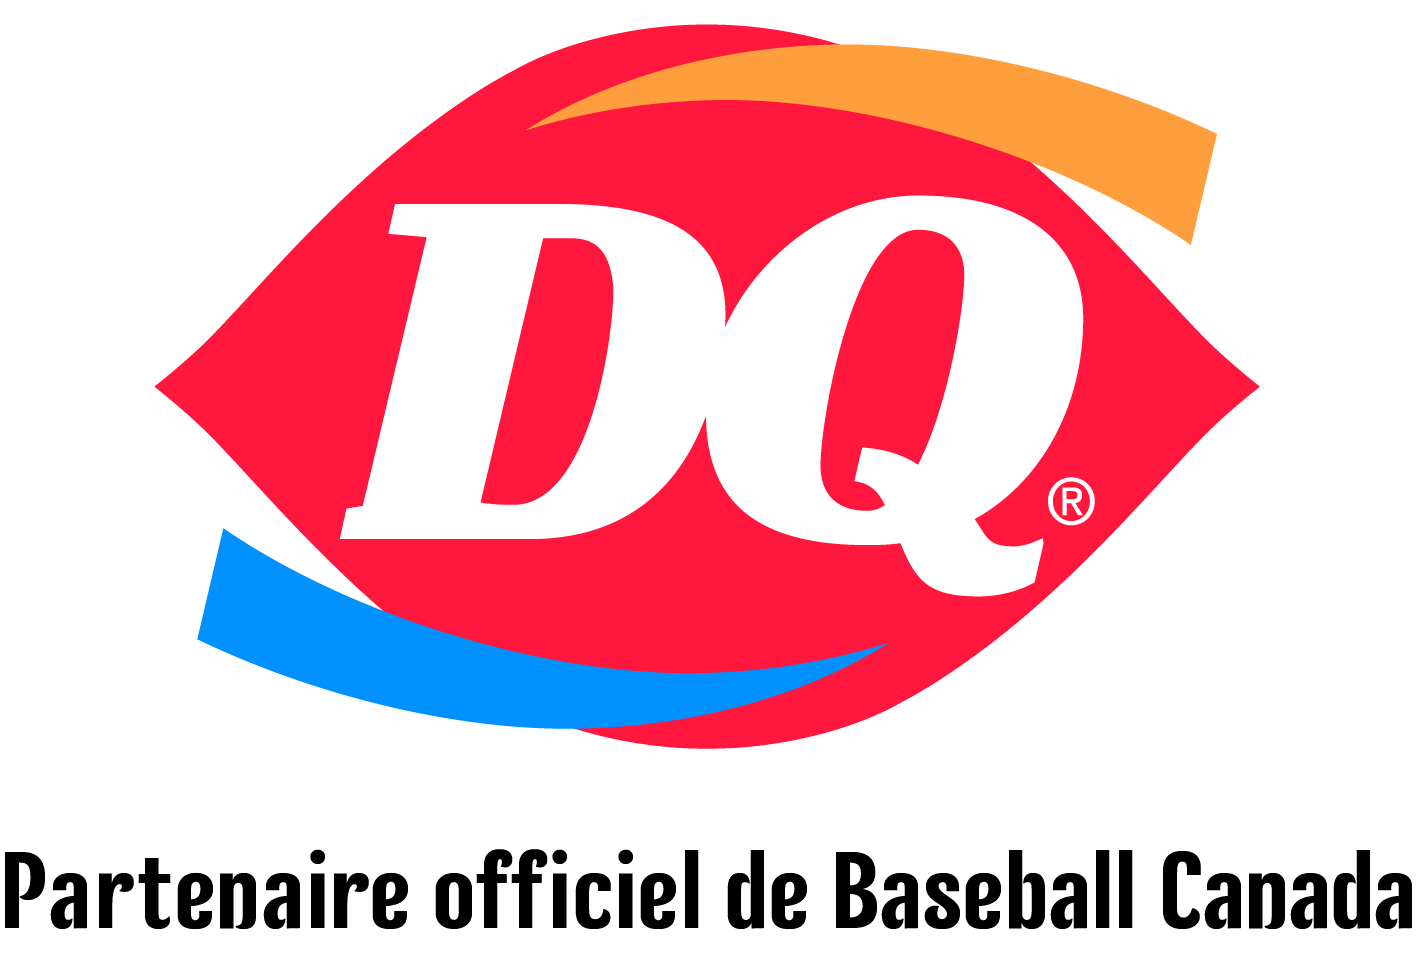 Un partenariat historique entre Baseball Canada et Dairy Queen Canada